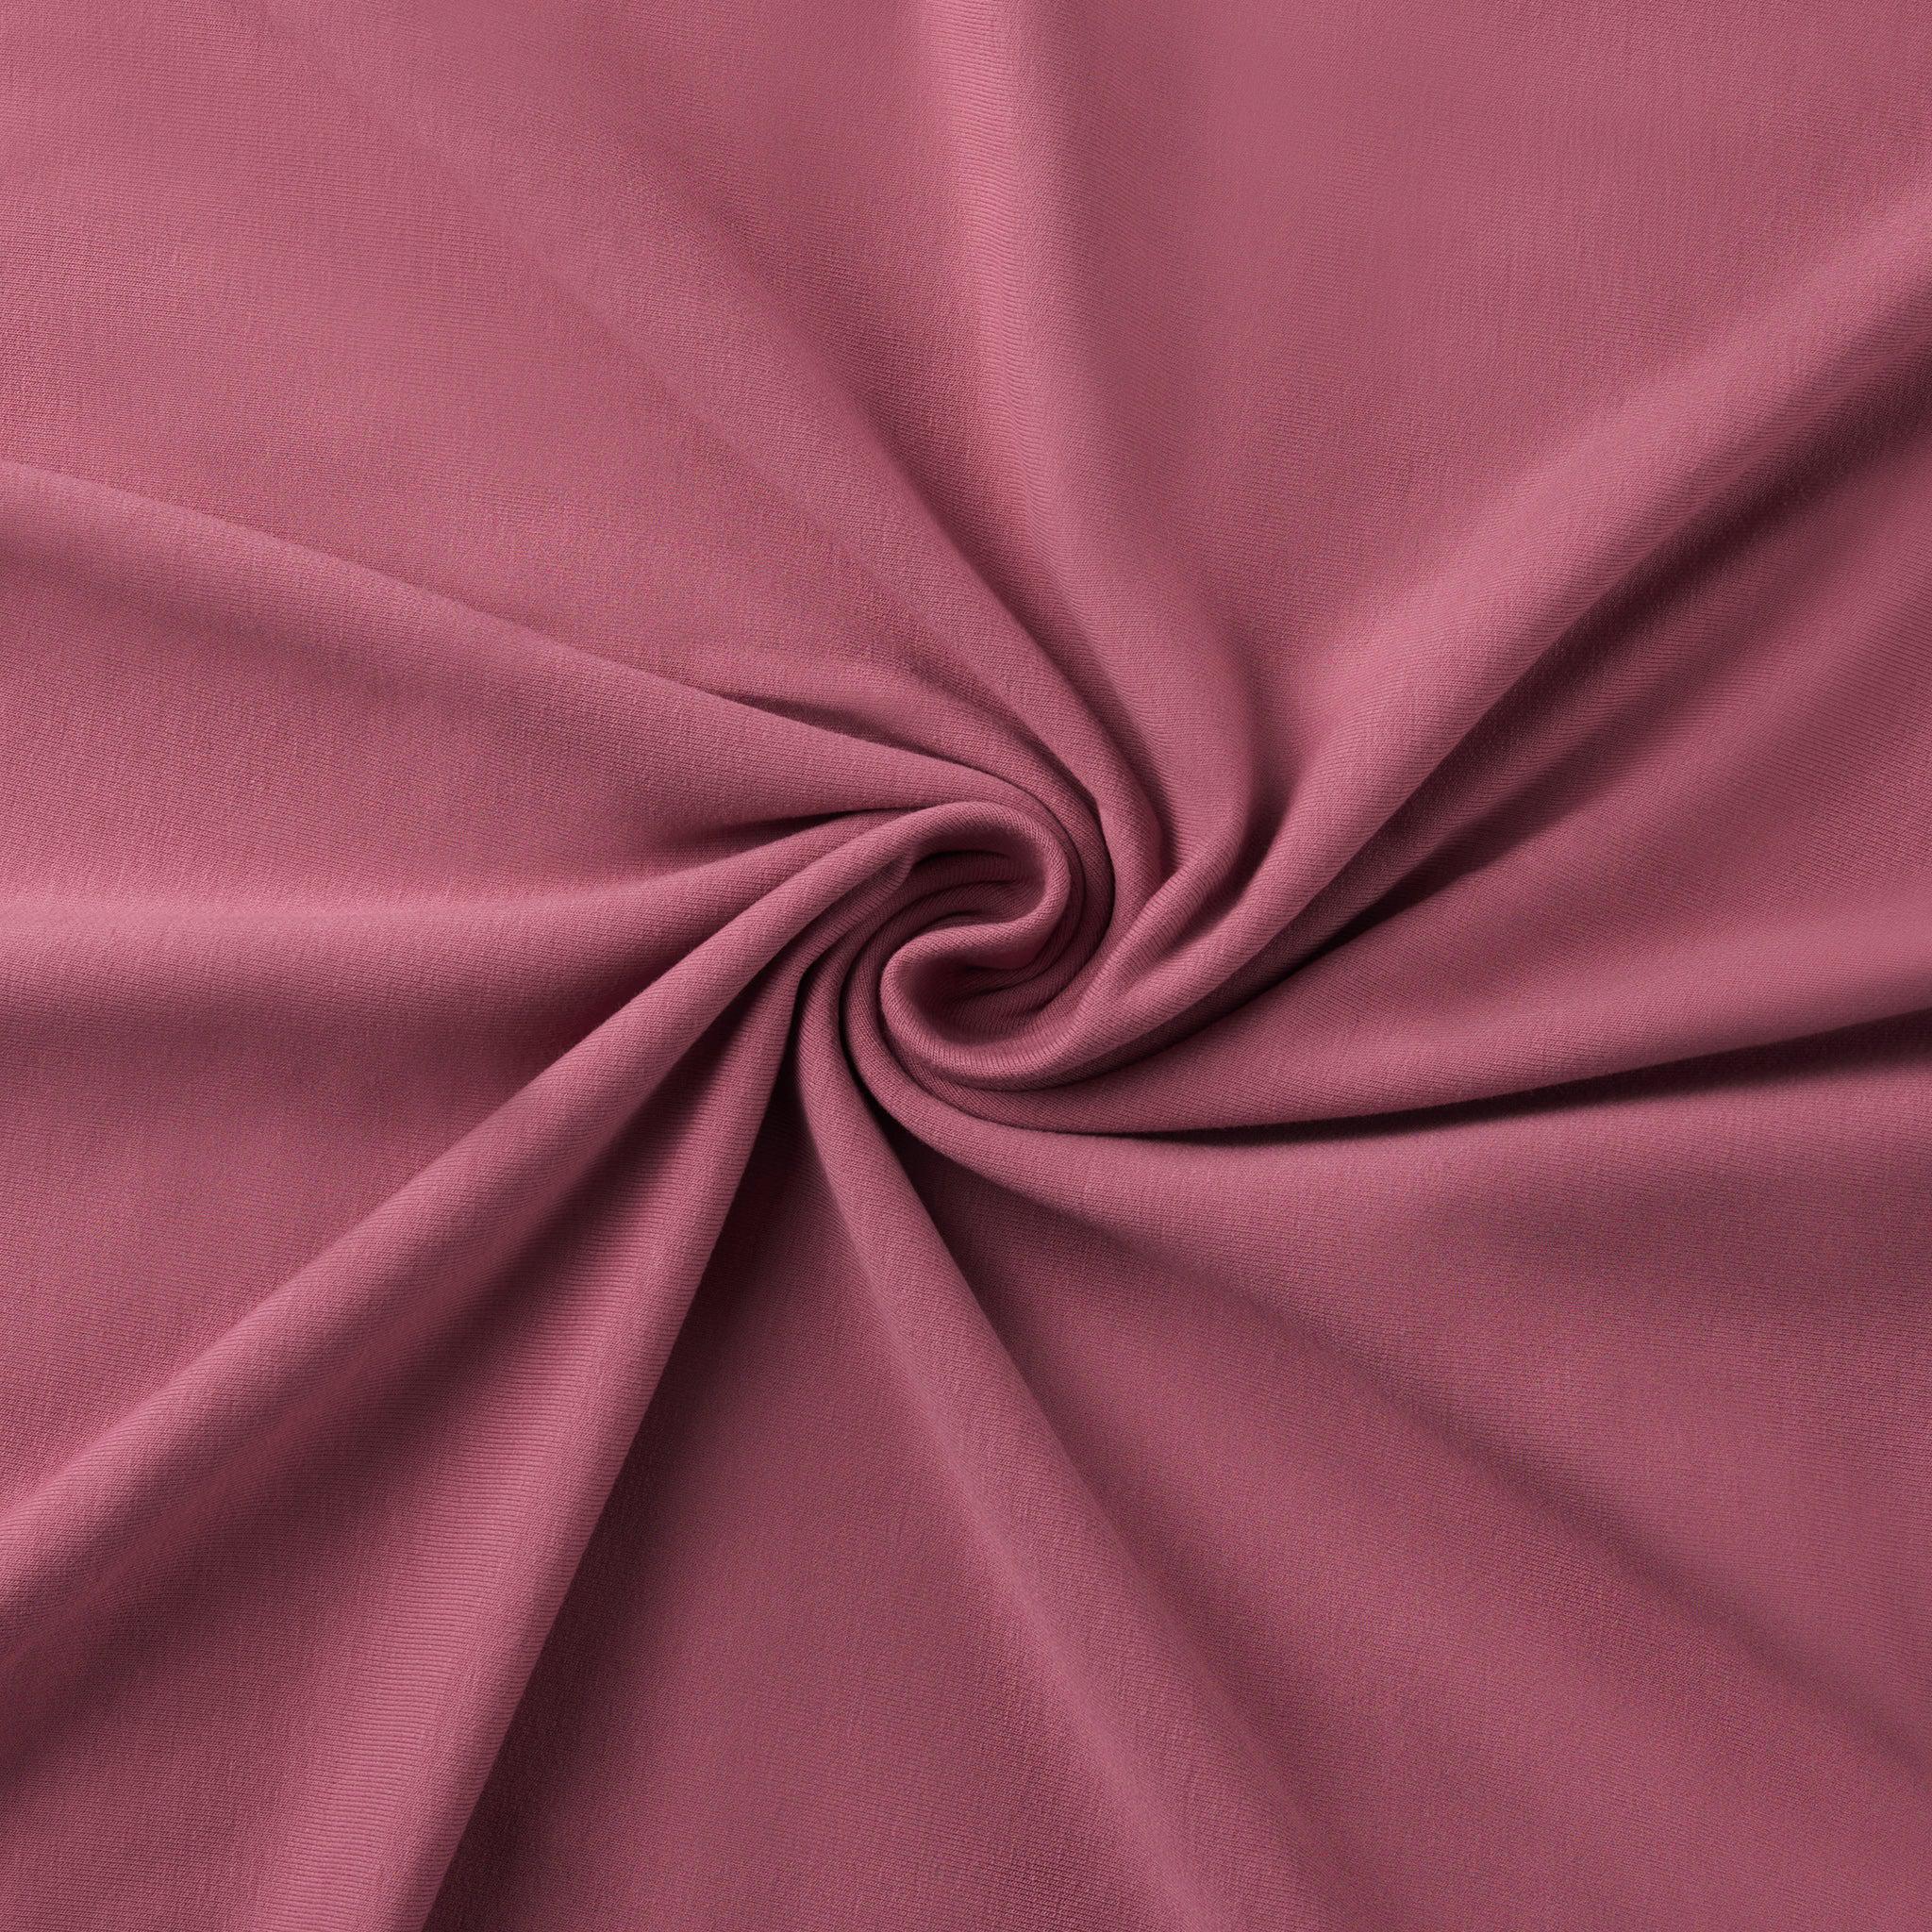 Australian milled cotton lycra solids ethical sustainable fabrics shop online Australia pink